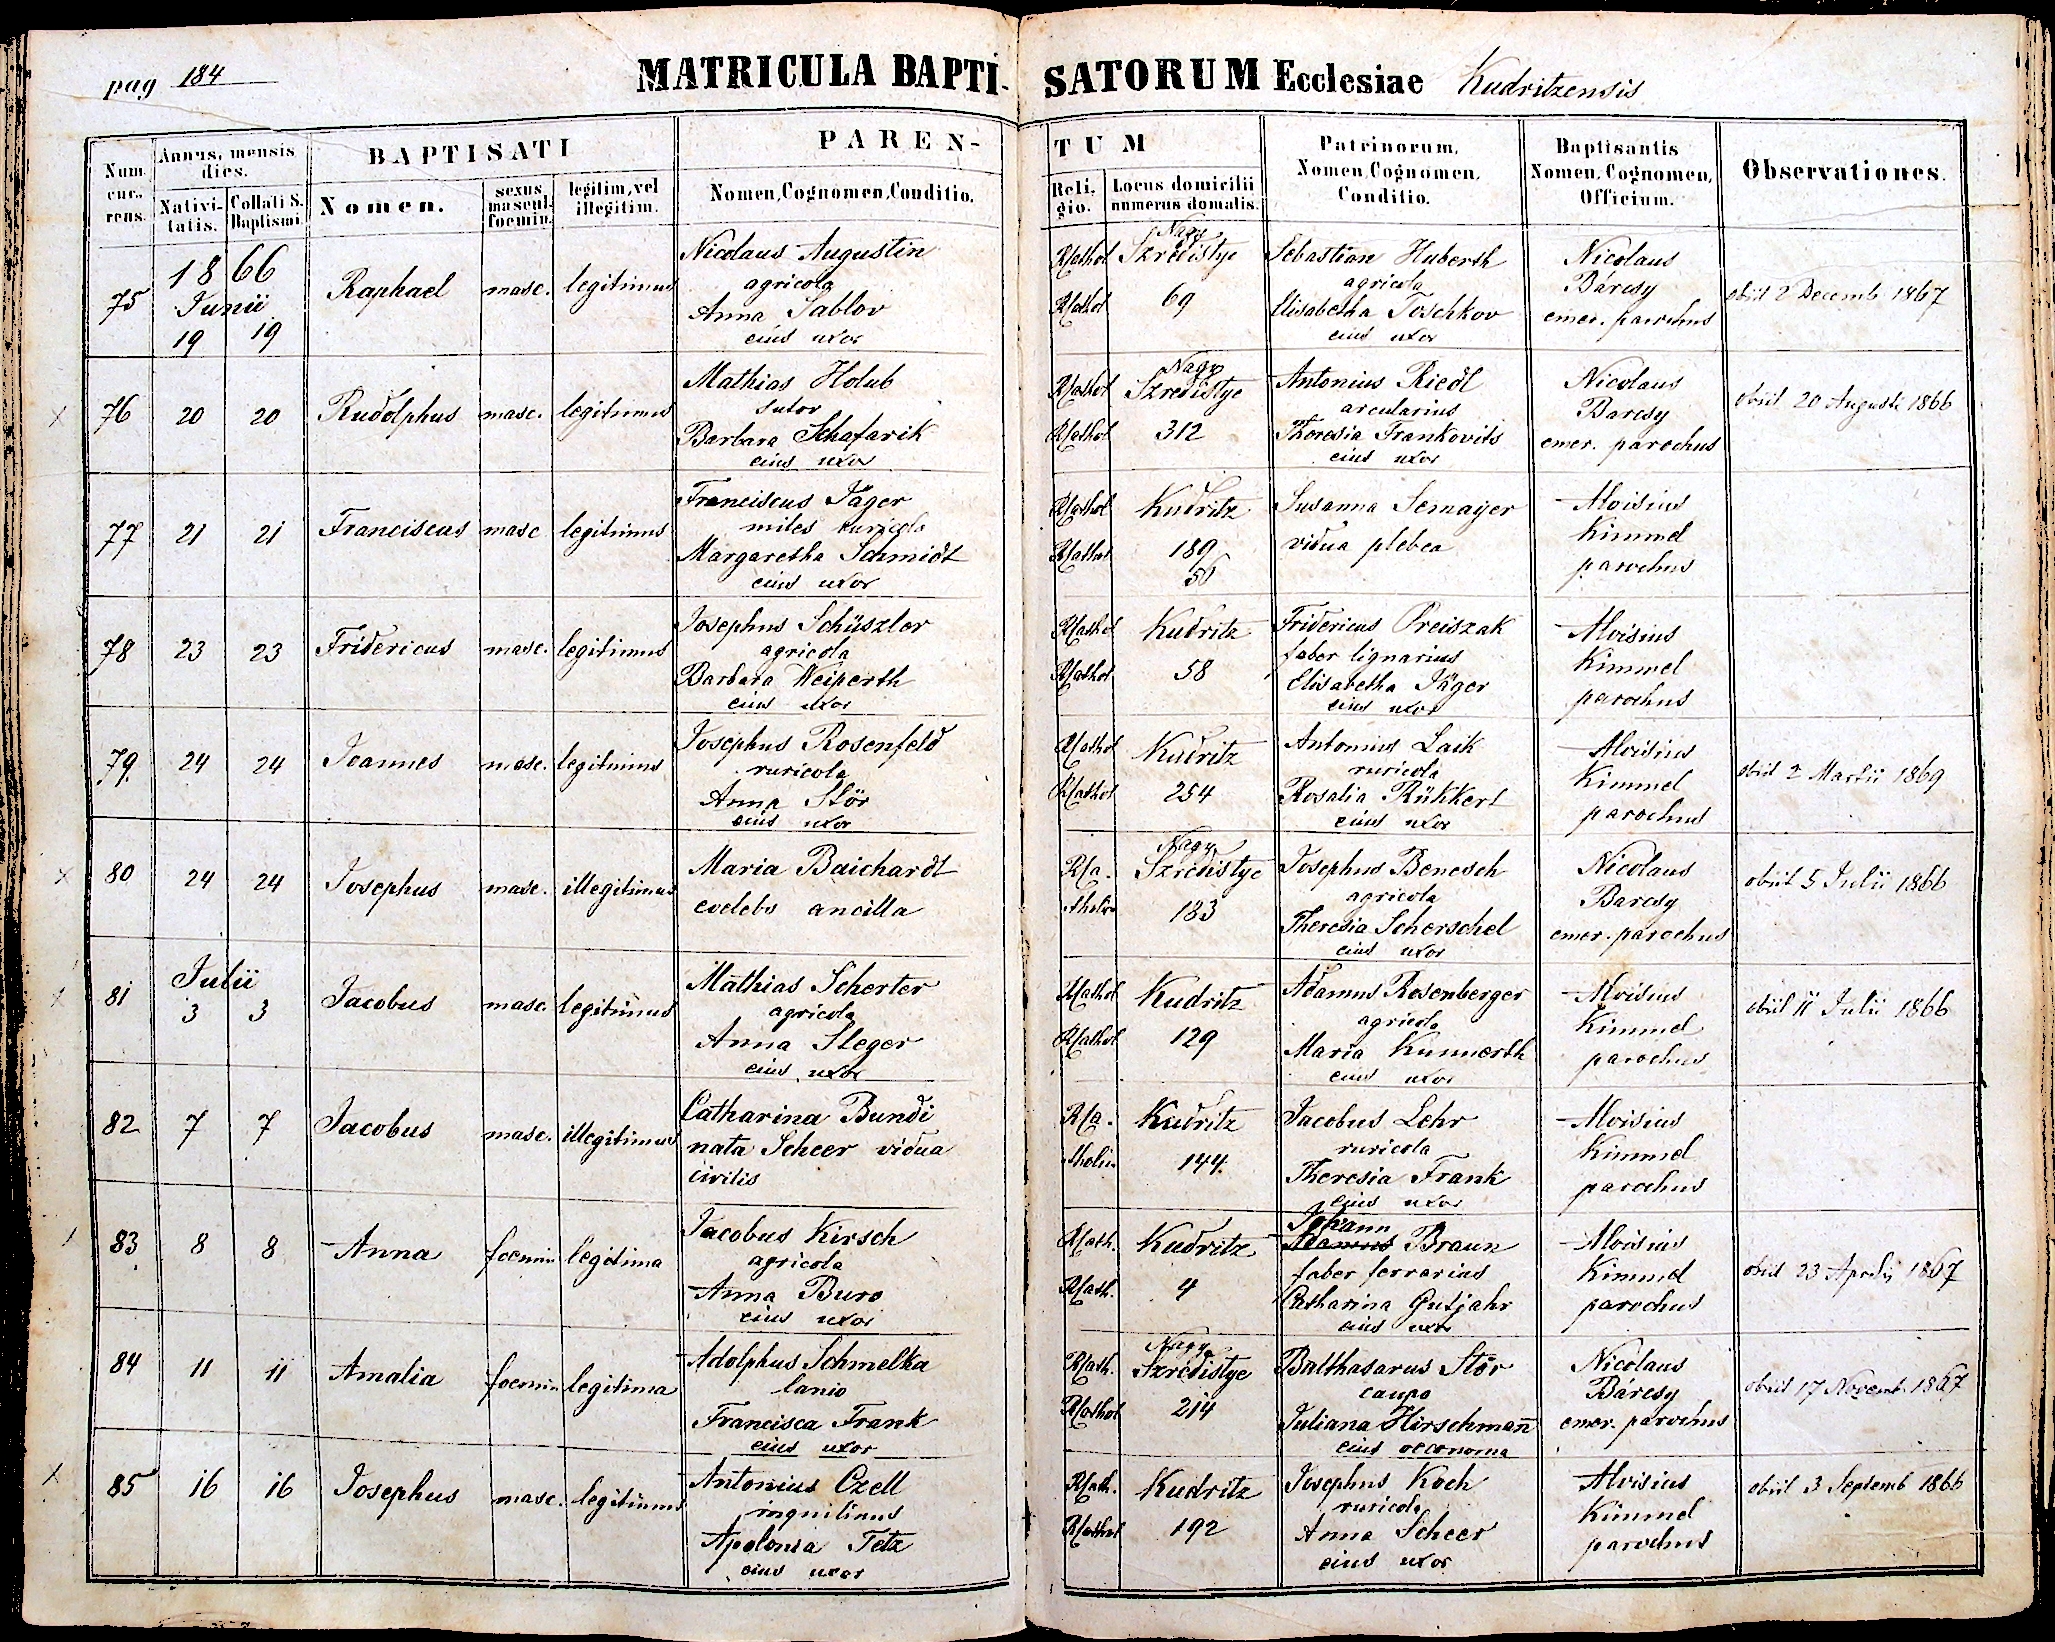 images/church_records/BIRTHS/1852-1870B/184